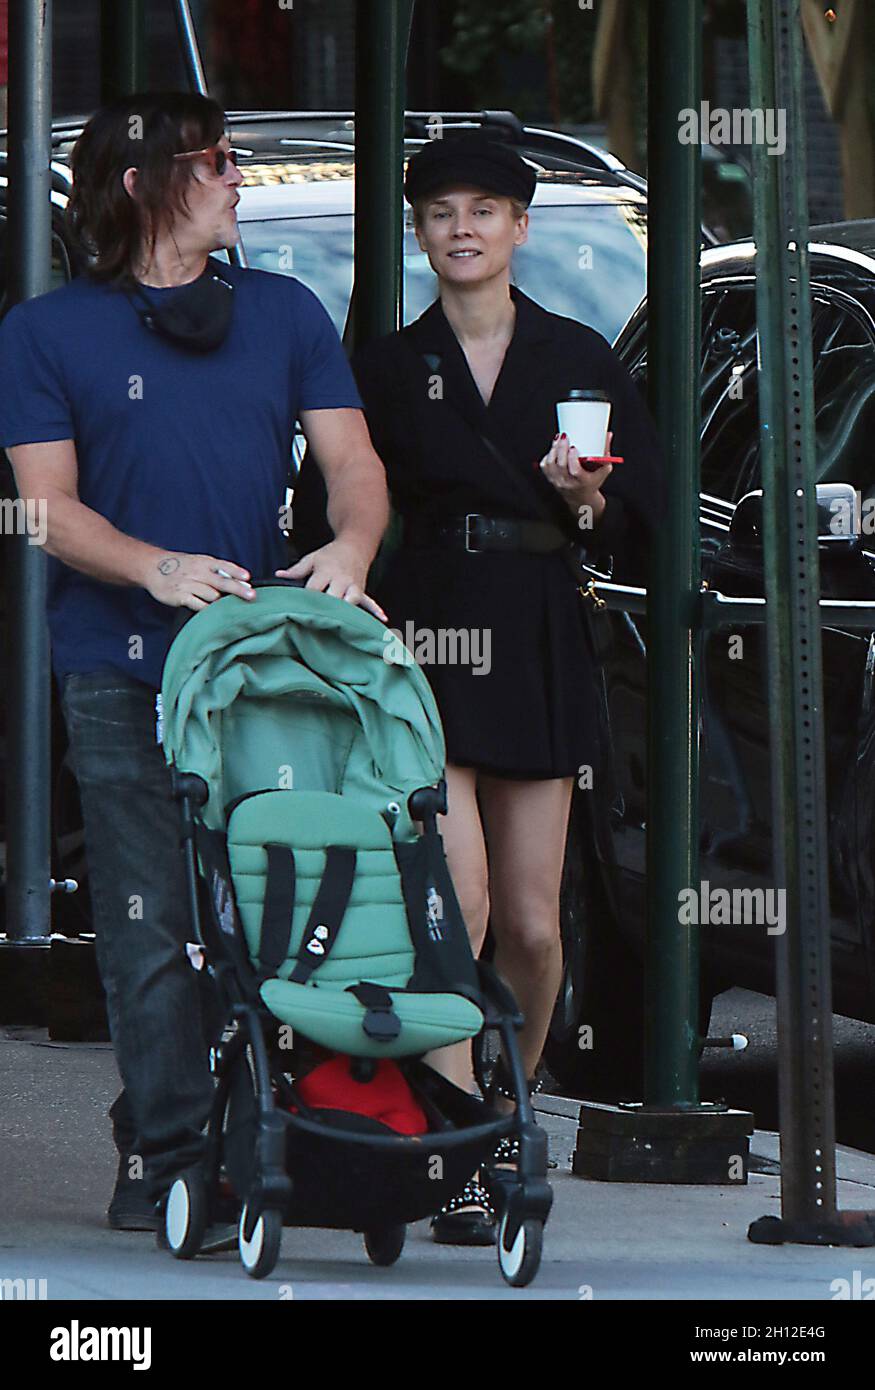 New York, NY, USA. Oktober 2021. Norman Reedus und Diane Kruger sahen am 15. Oktober 2021 in Soho in New York City spazieren. Quelle: Rw/Media Punch/Alamy Live News Stockfoto